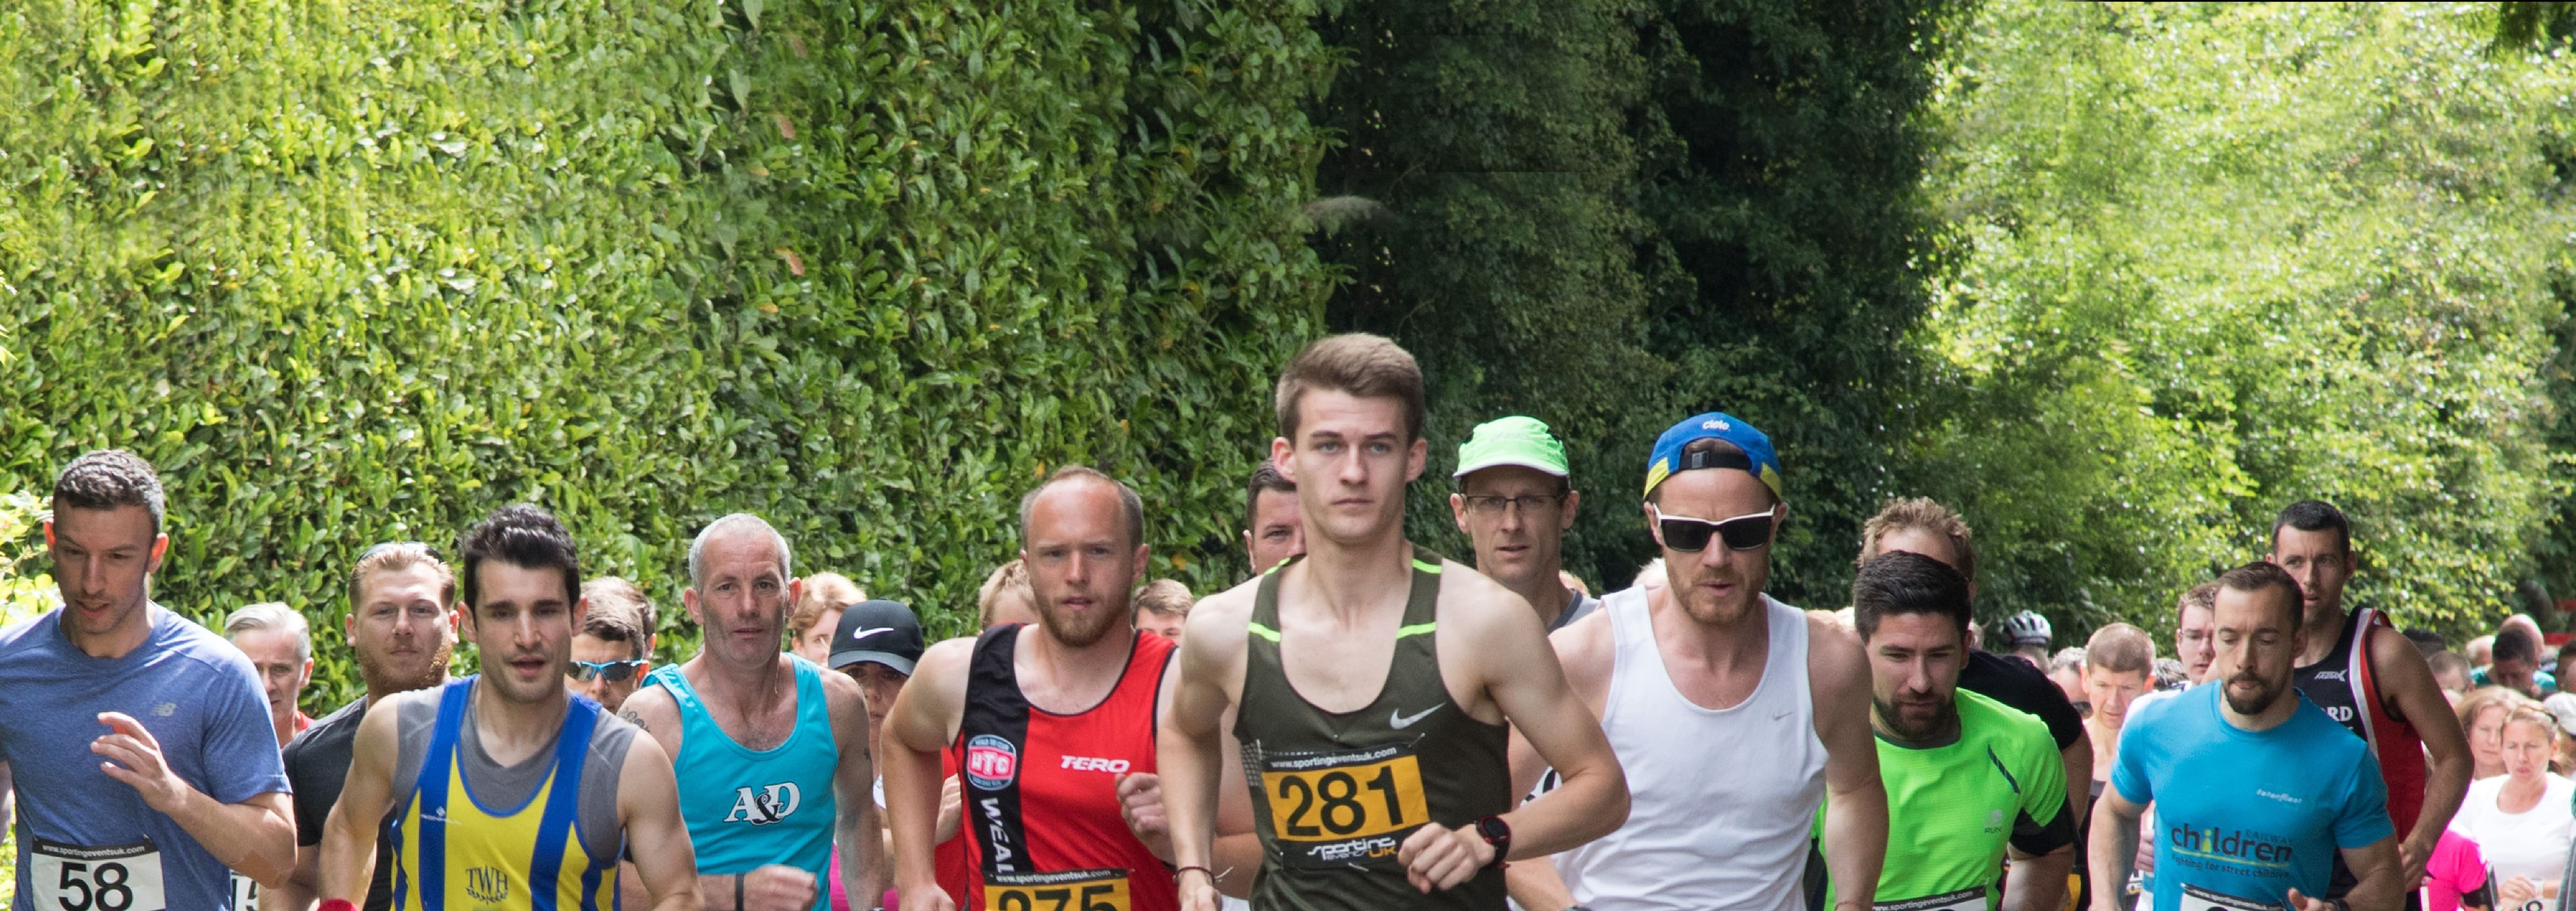 Maidstone Half Marathon